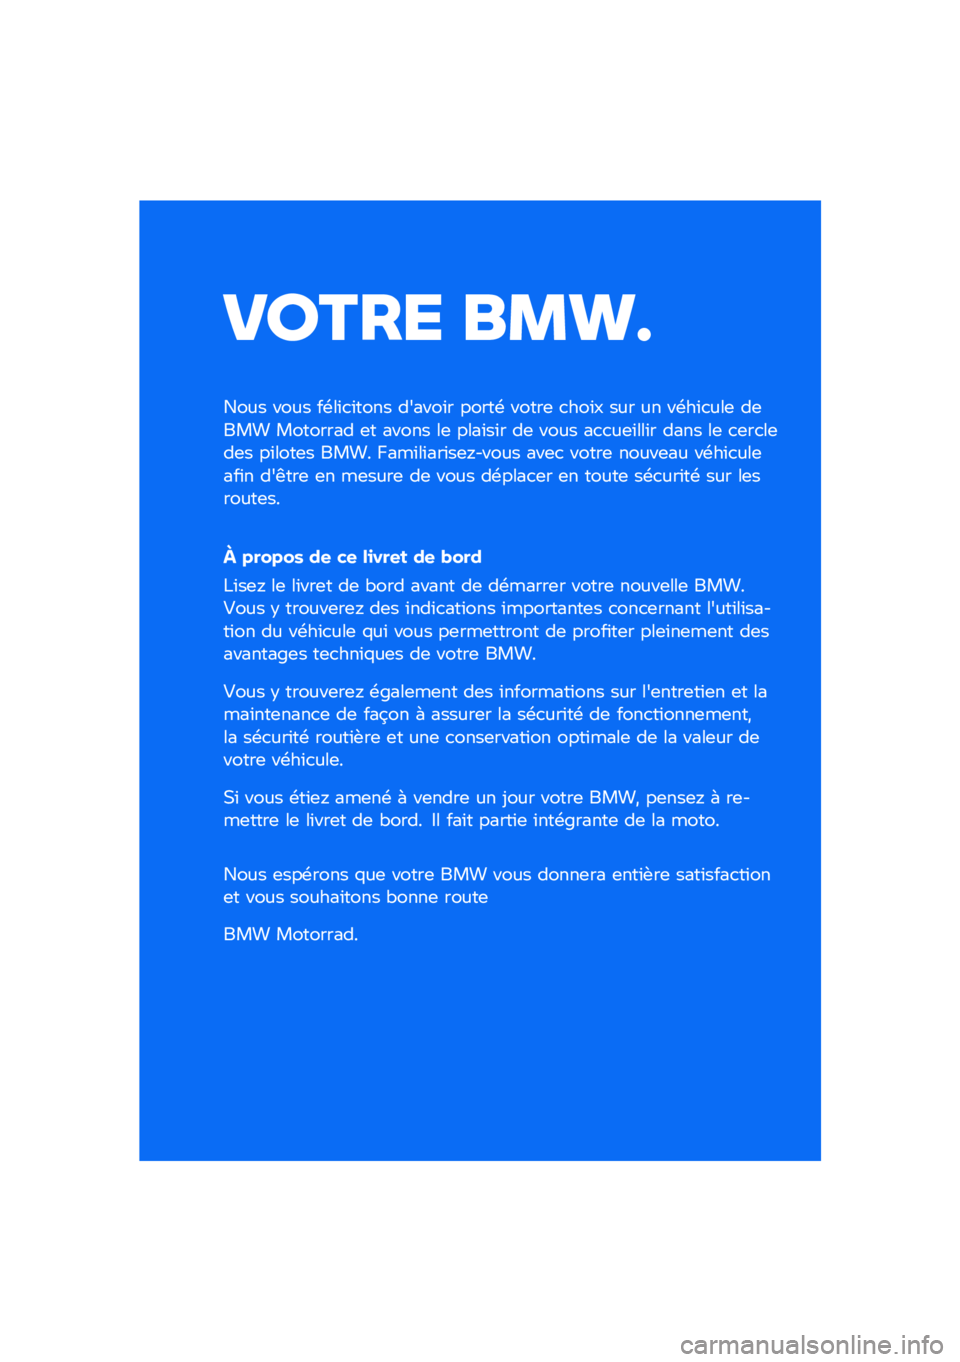 BMW MOTORRAD R NINE T URVAN G/S 2020  Livret de bord (in French) ����� ��\b�	�

���� ���� ��\b��\f�
�\f���� ������\f� �����\b �����	 �
���\f� ��� �� ��\b��\f�
���	 ��	��� �������� �	� ����� ��	 ���